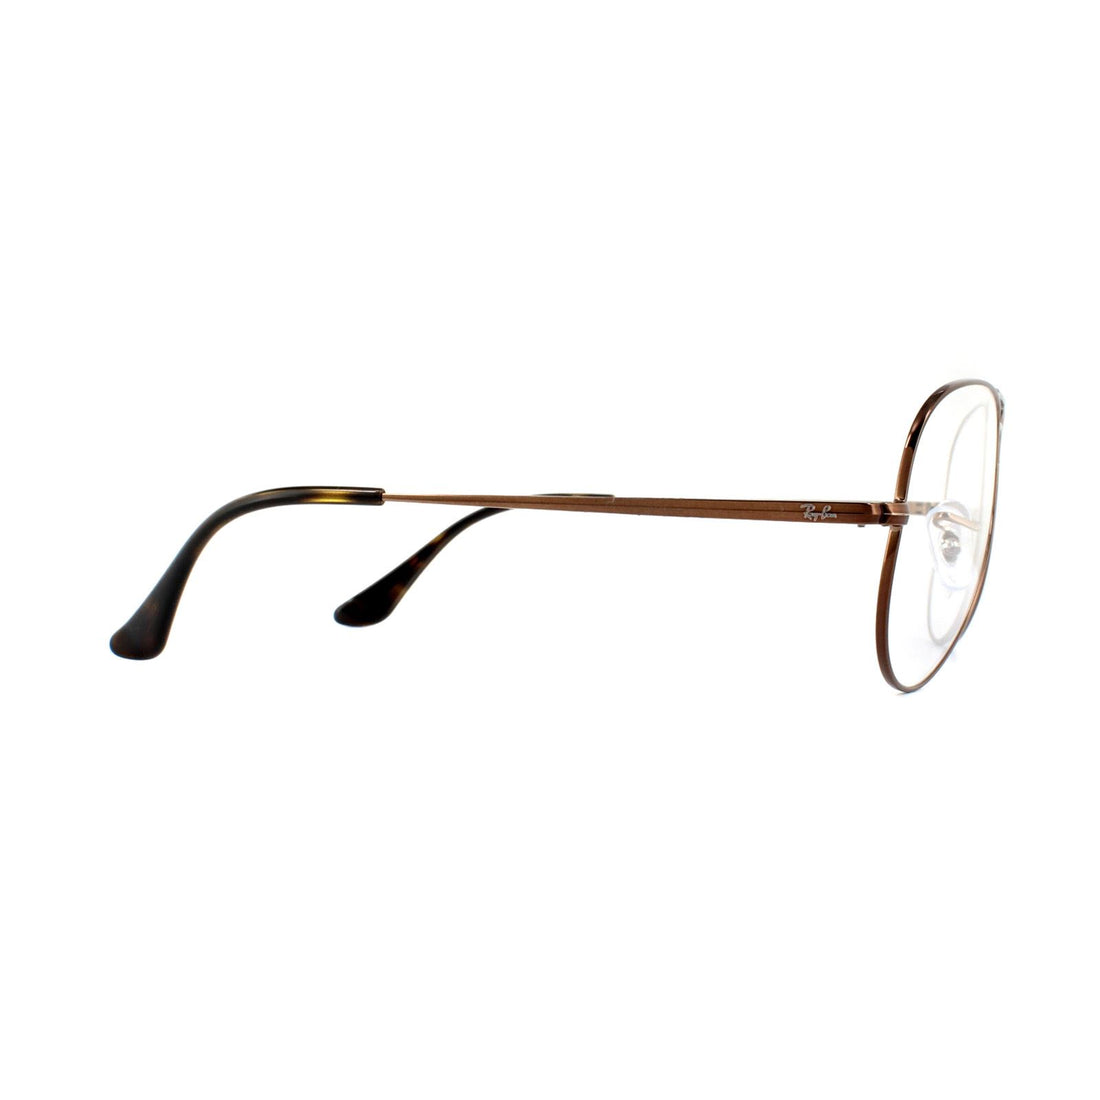 Ray-Ban 6489 Aviator Glasses Frames